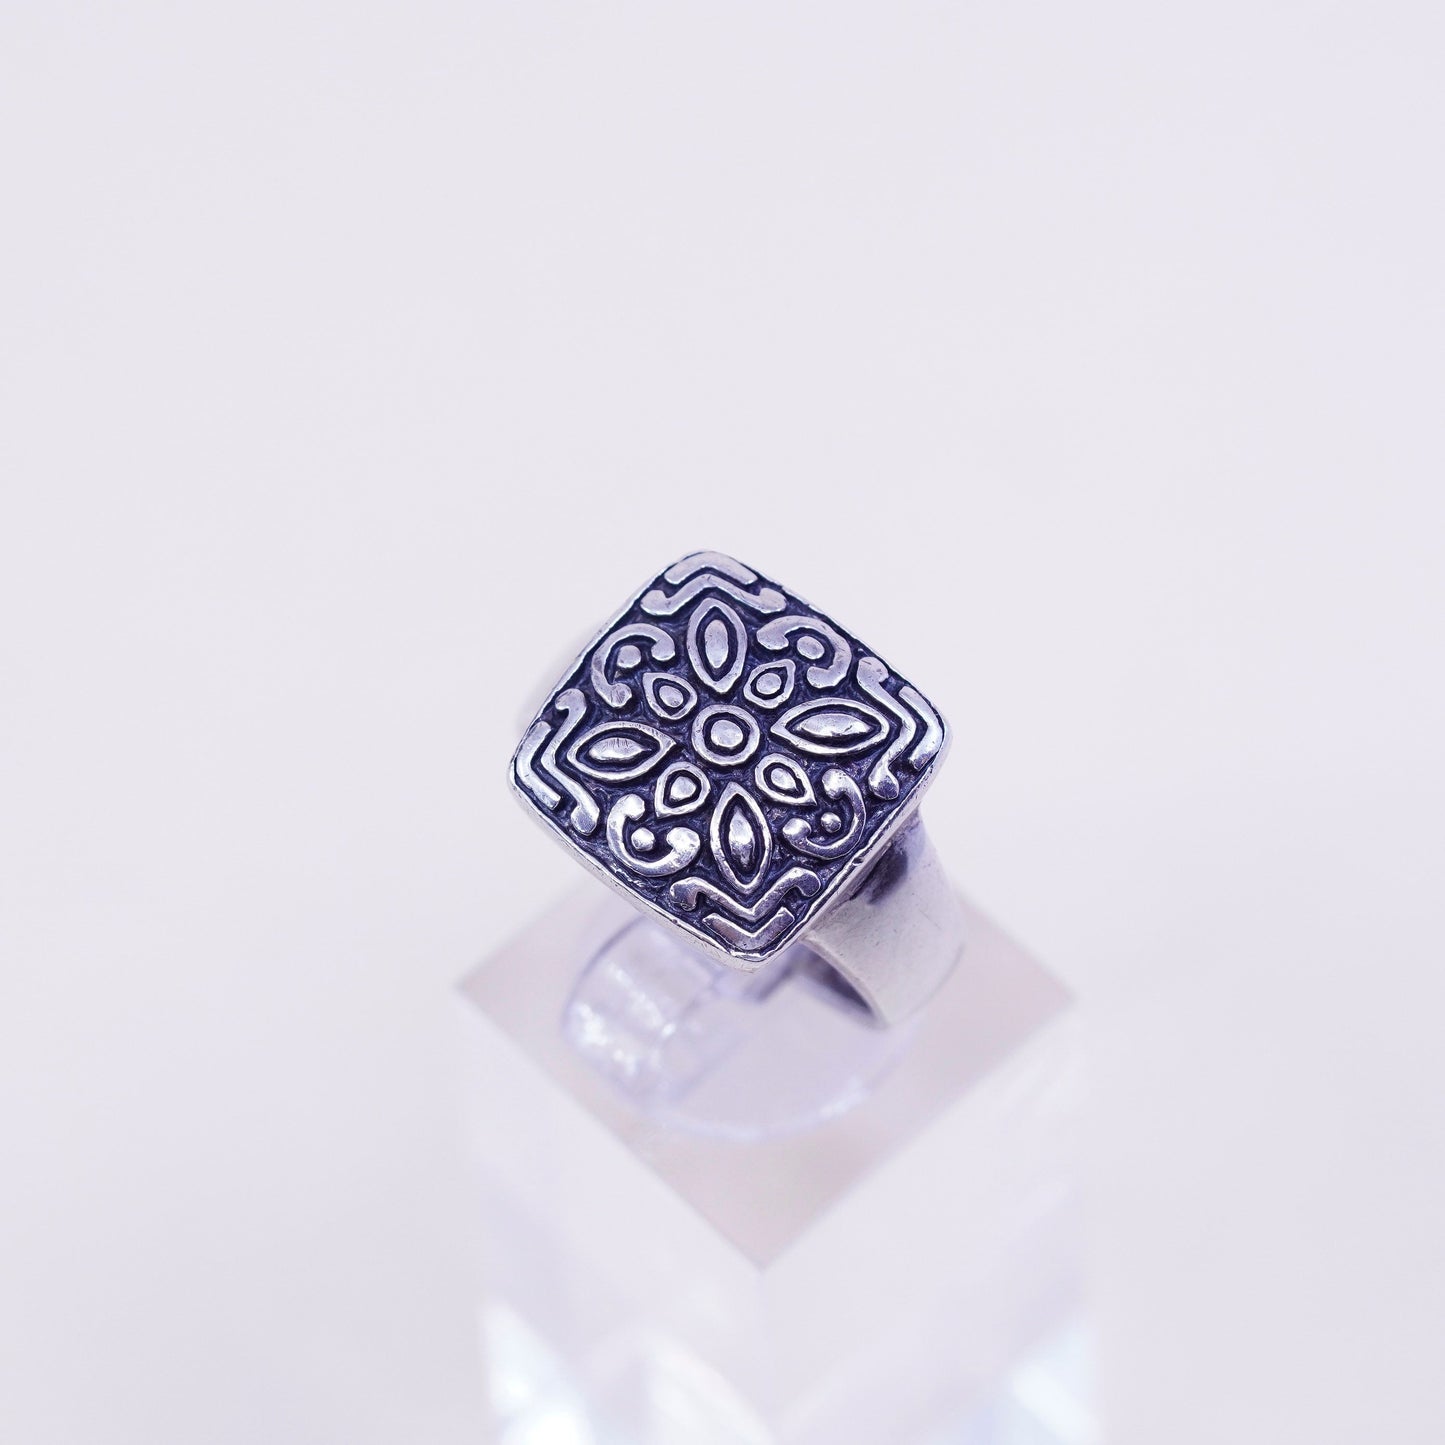 Size 8, vintage sterling 925 silver handmade bali statement ring